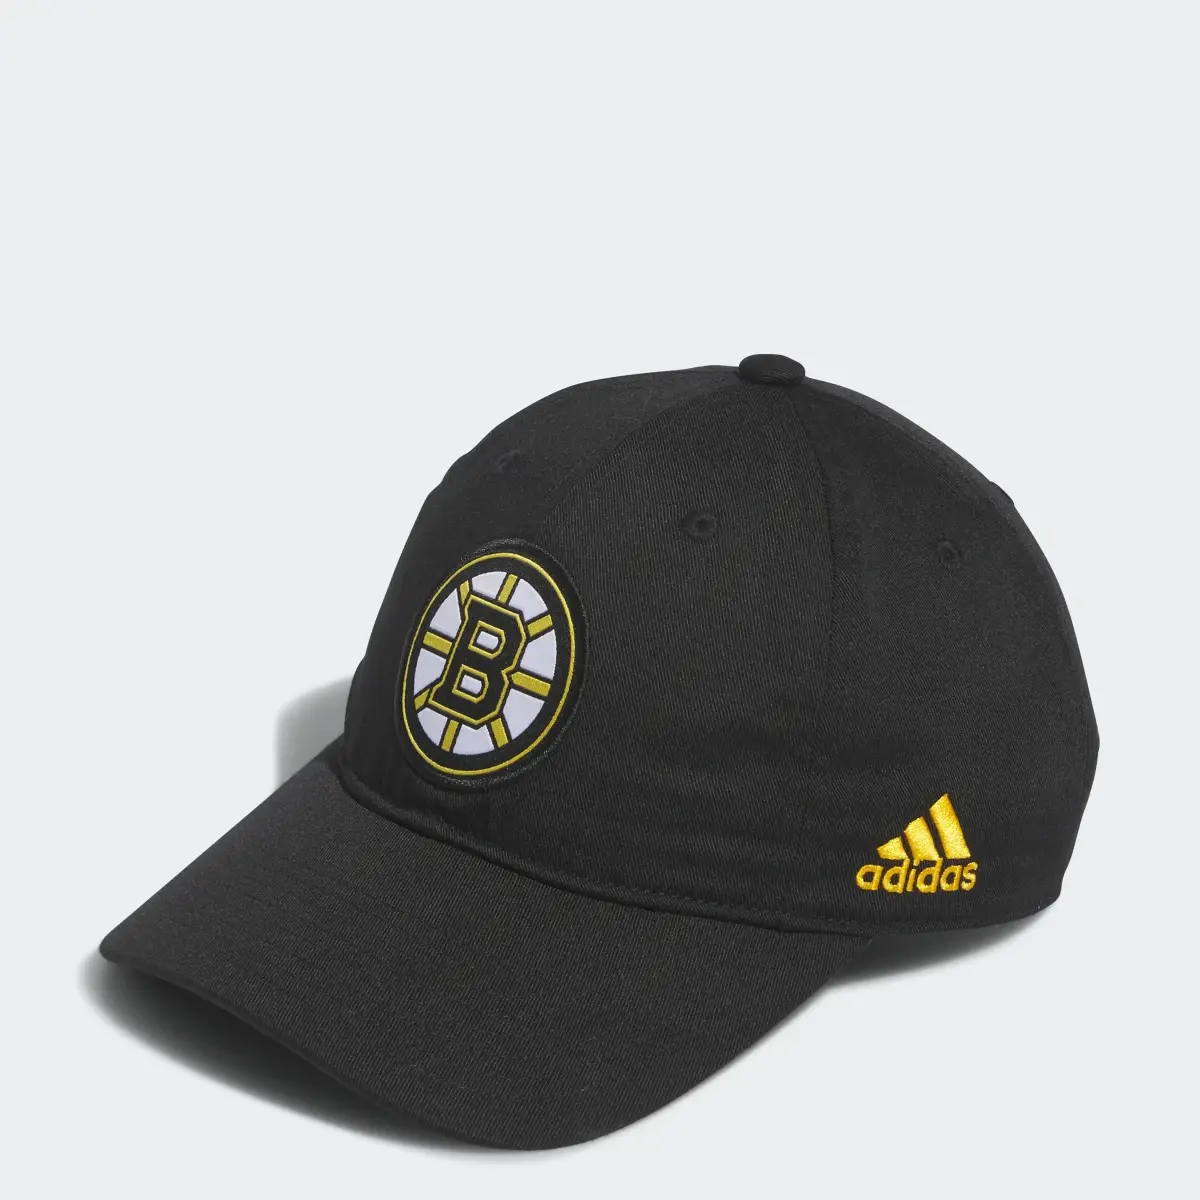 Adidas Bruins Slouch Adjustable Cap. 1